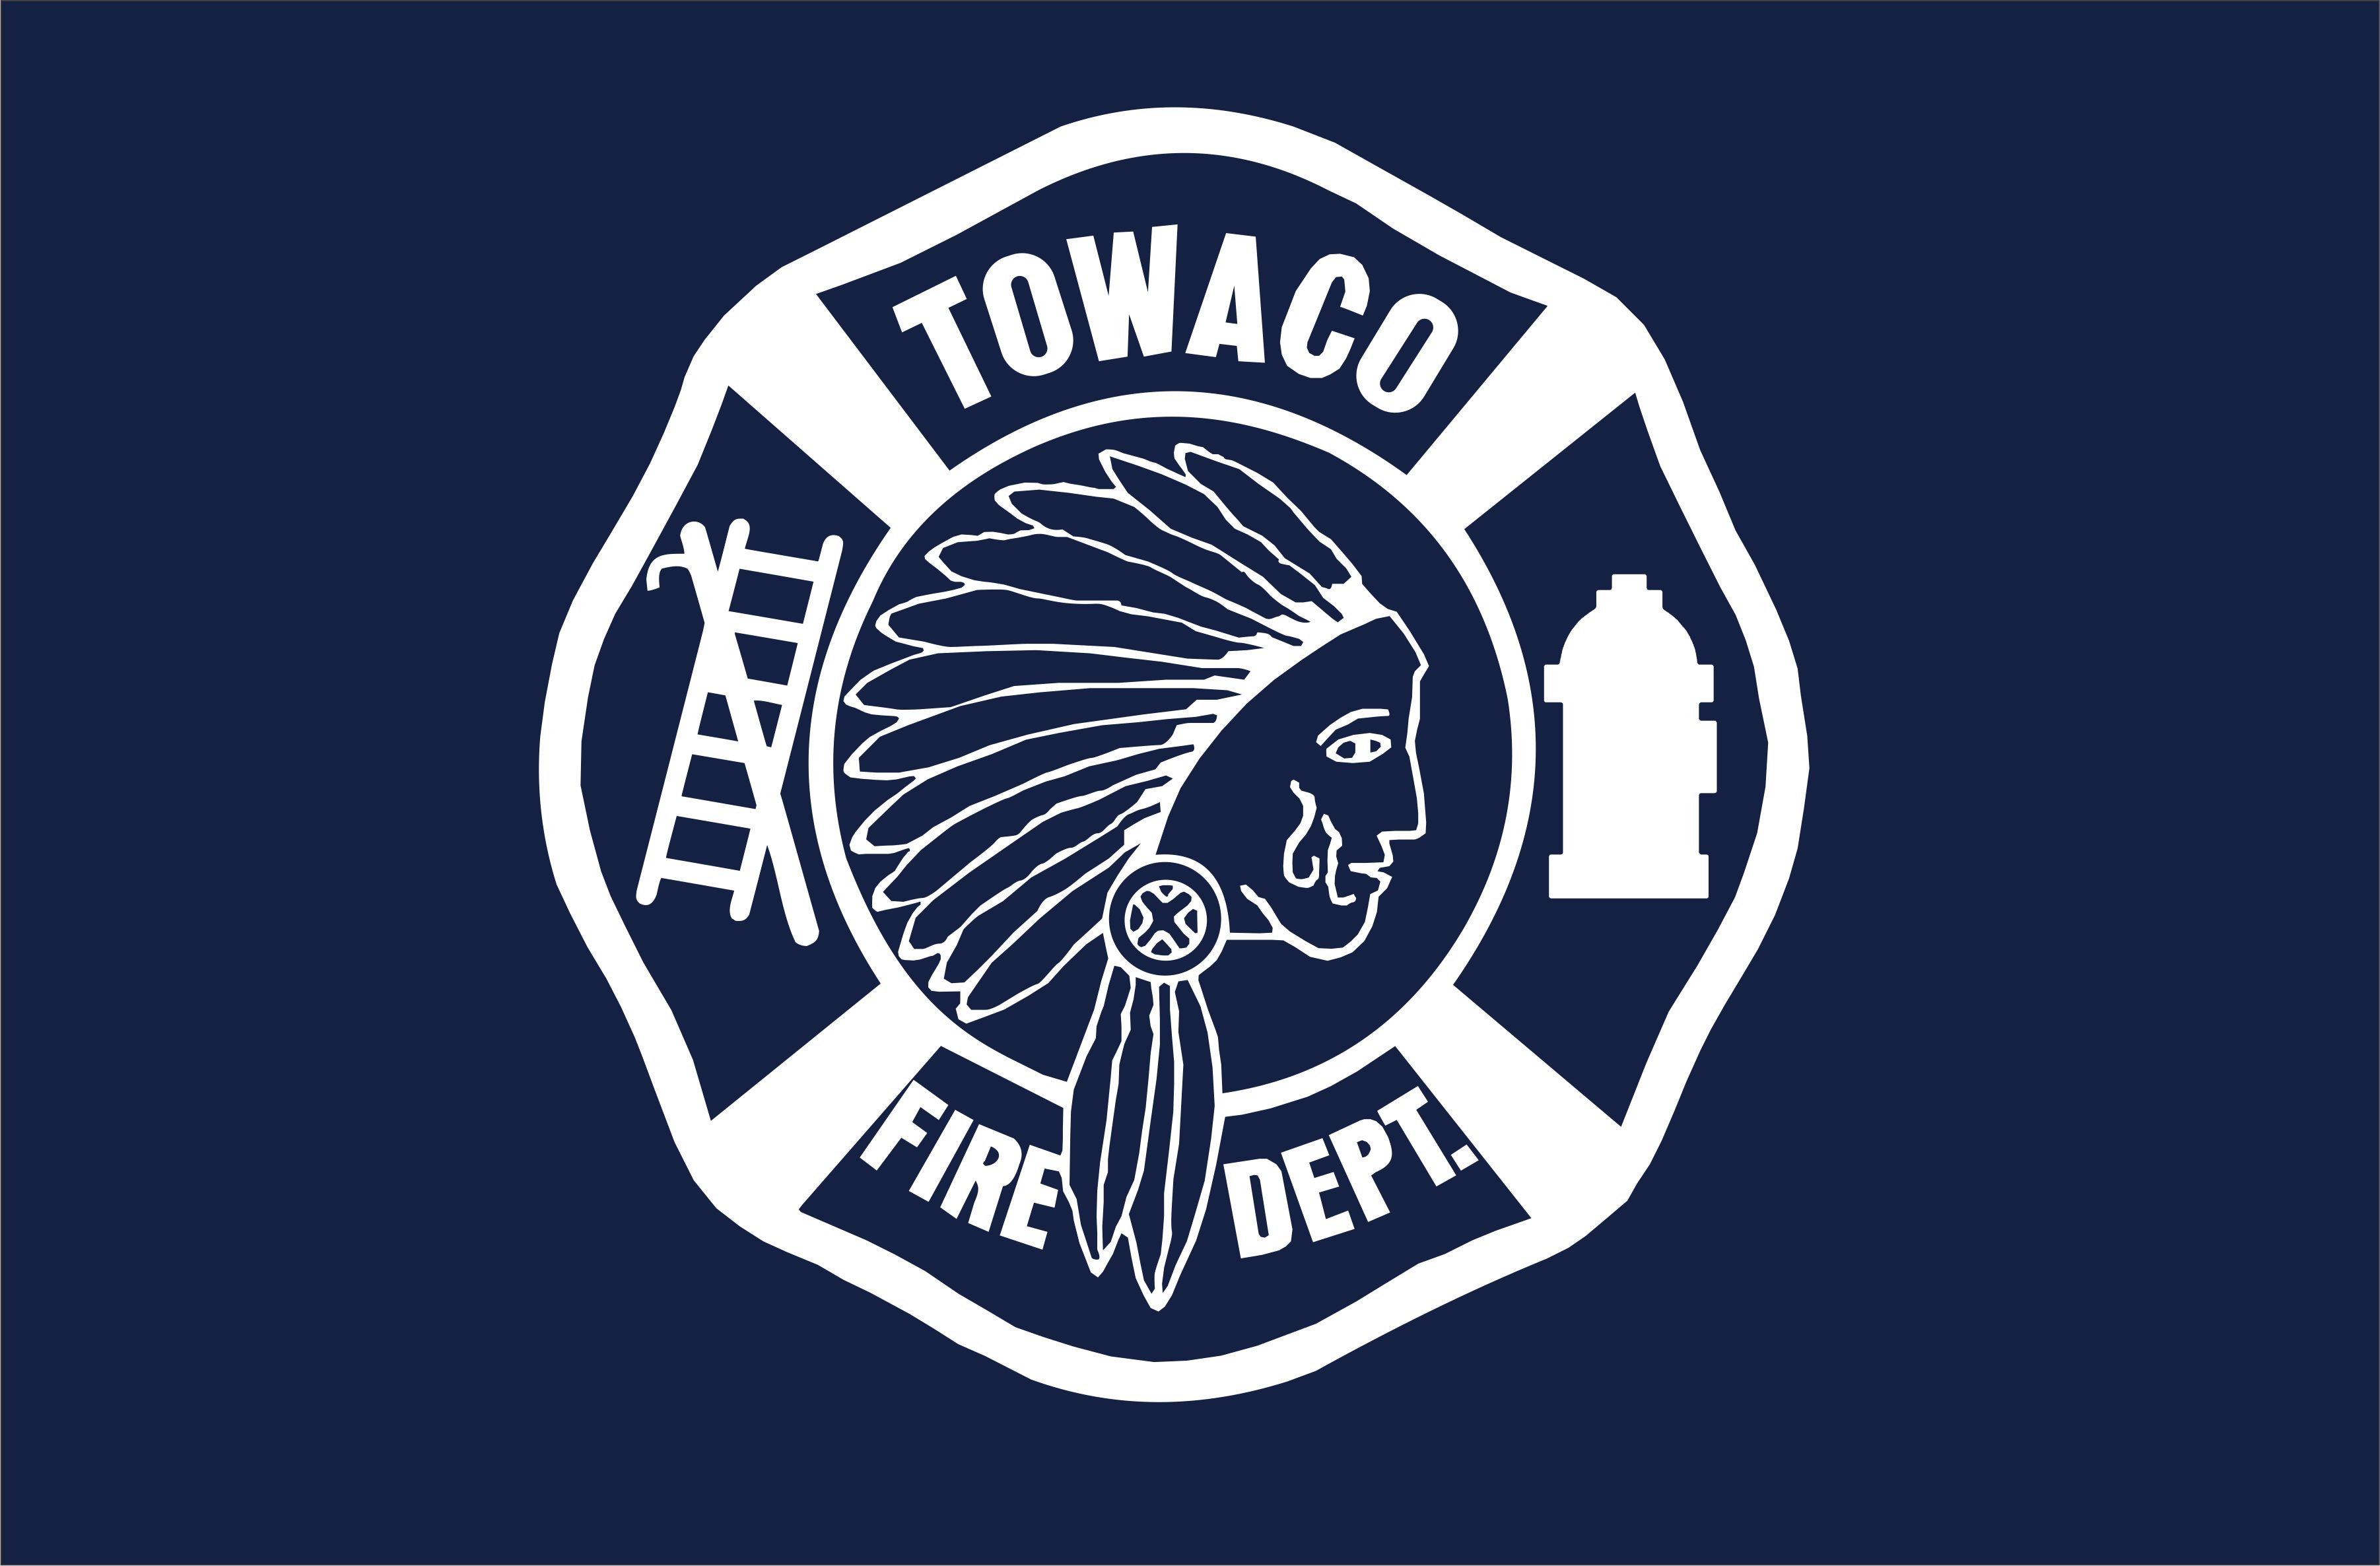 Towaco Fire Department